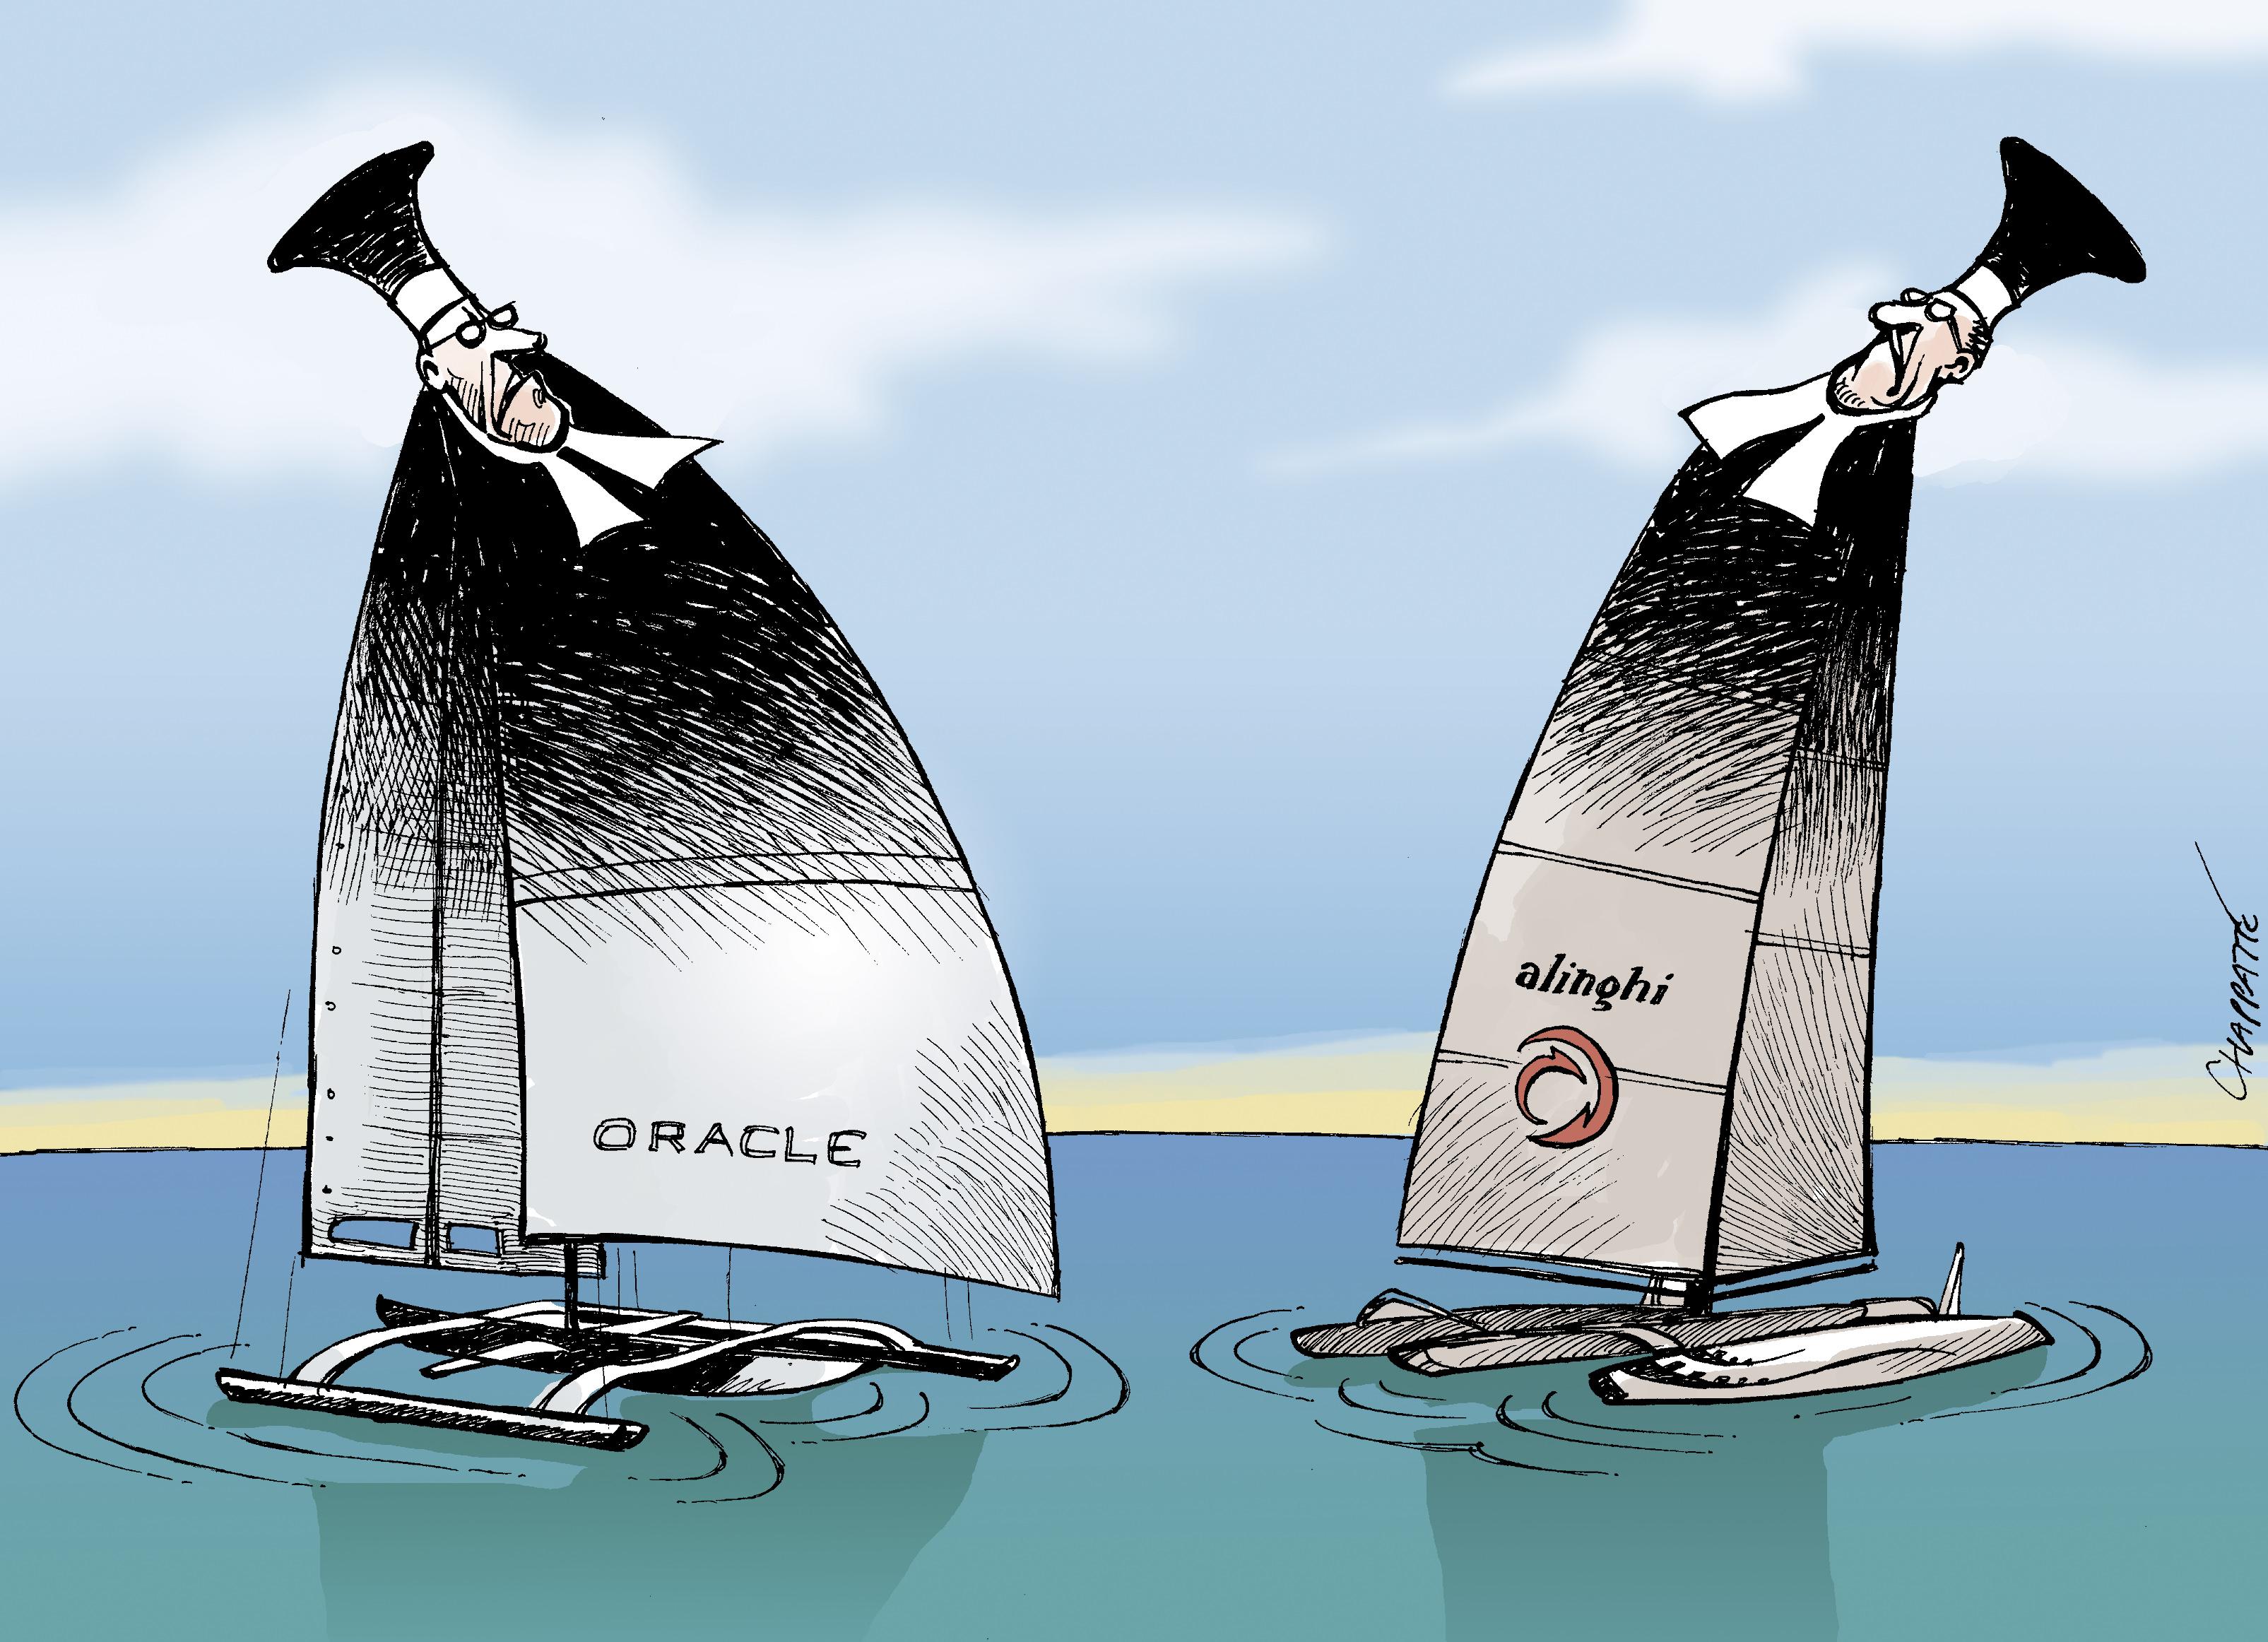 Oracle vs Alinghi